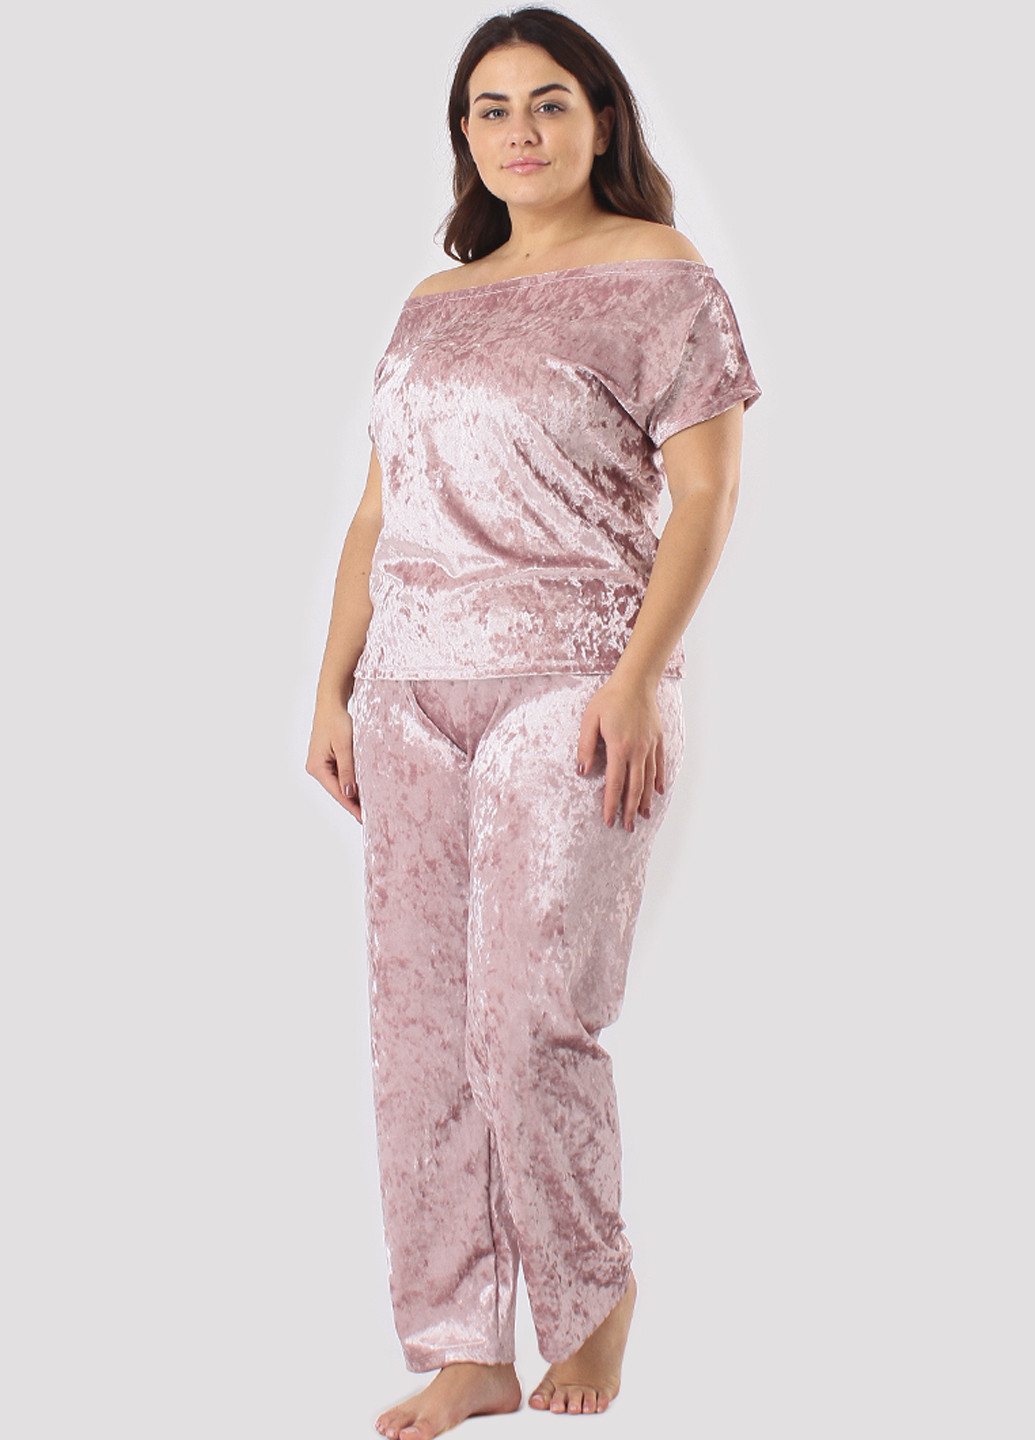 Светло-розовая всесезон пижама (футболка, брюки) футболка + брюки Ghazel